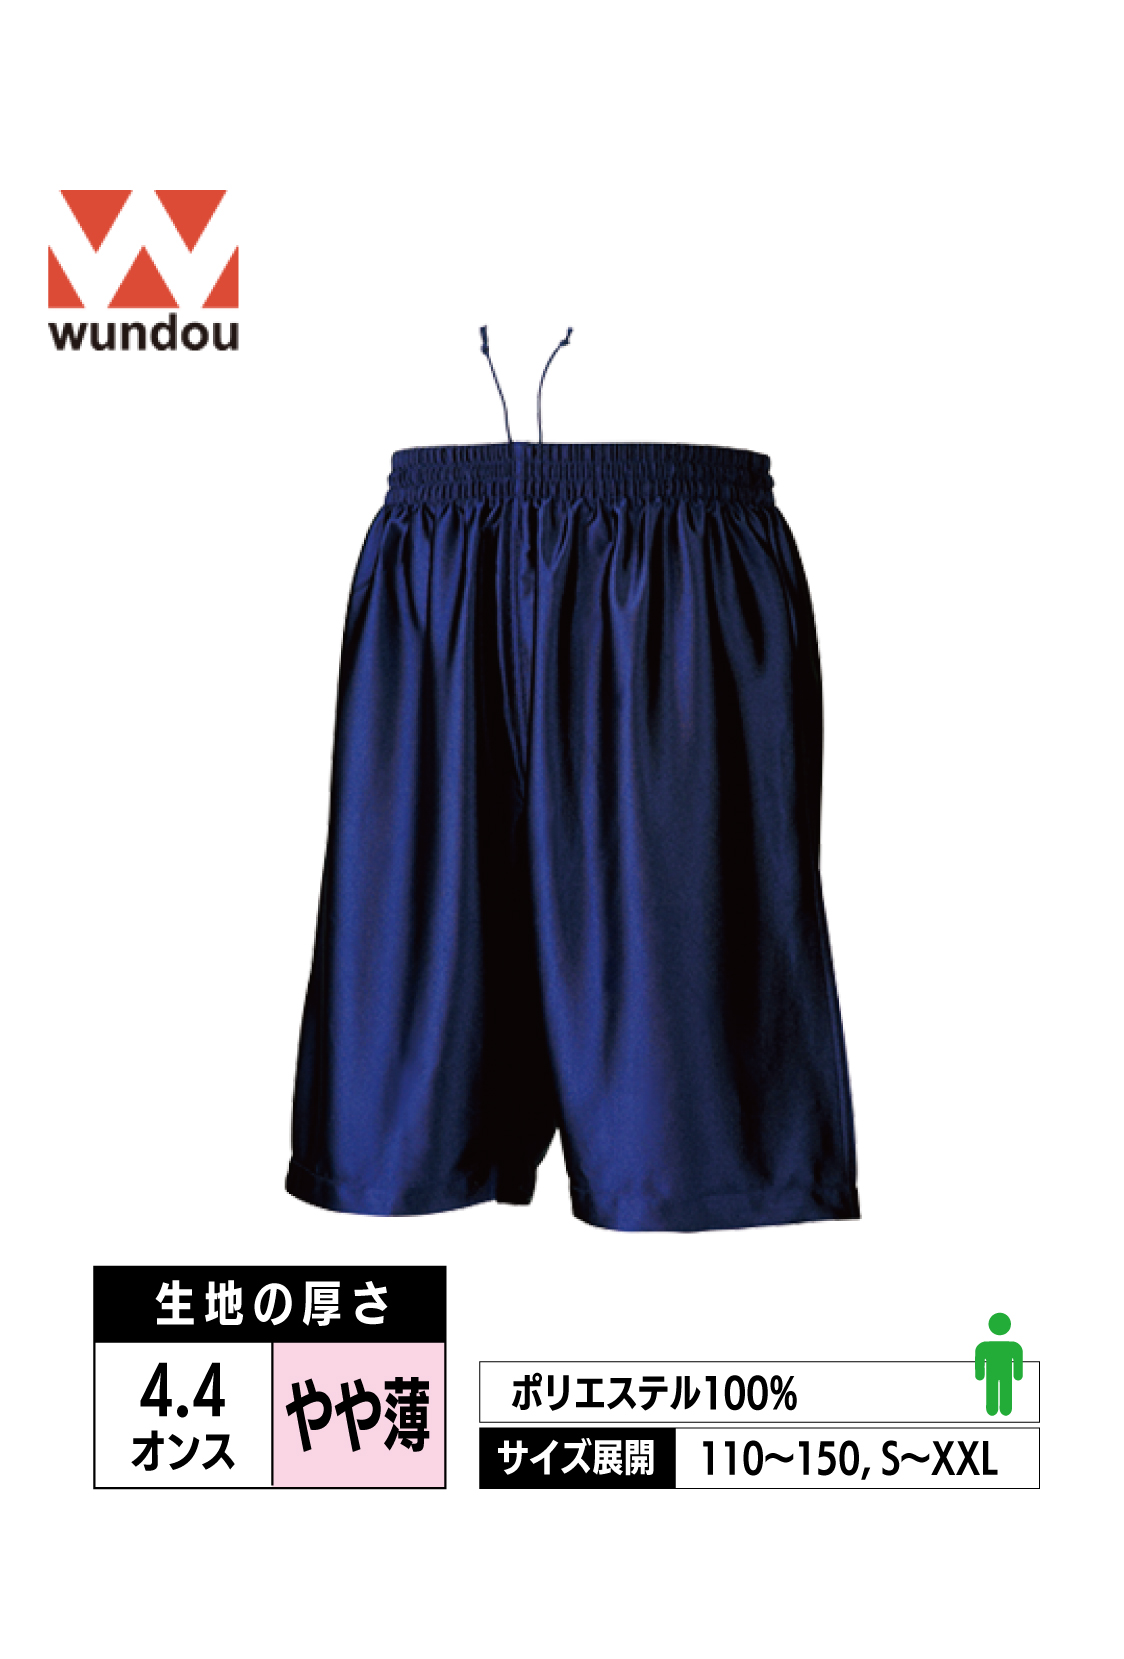 P8500｜バスケットパンツ【全11色】wundou